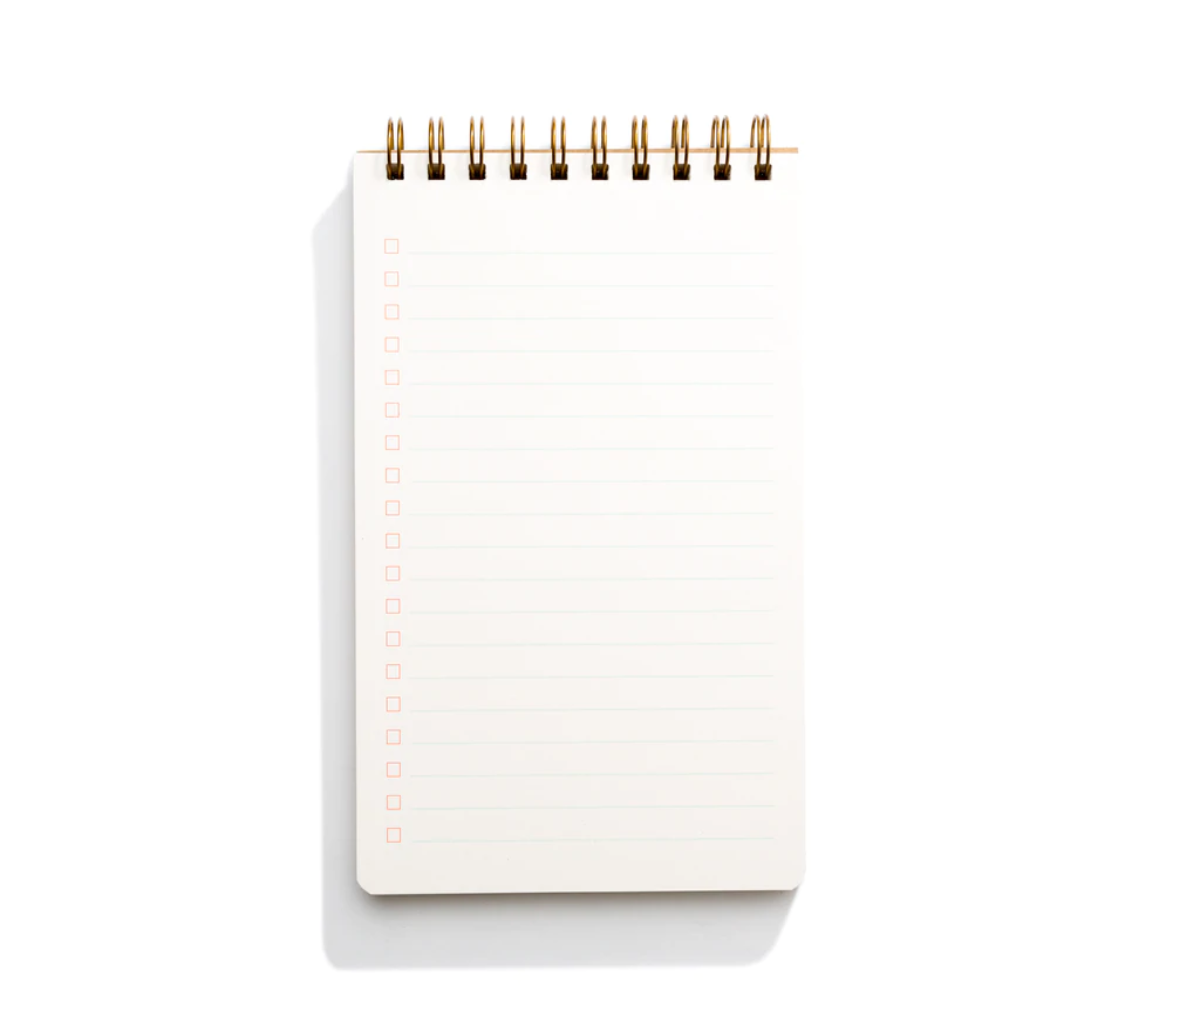 Lined Task Pad, Pink Lemonade - Shorthand Press